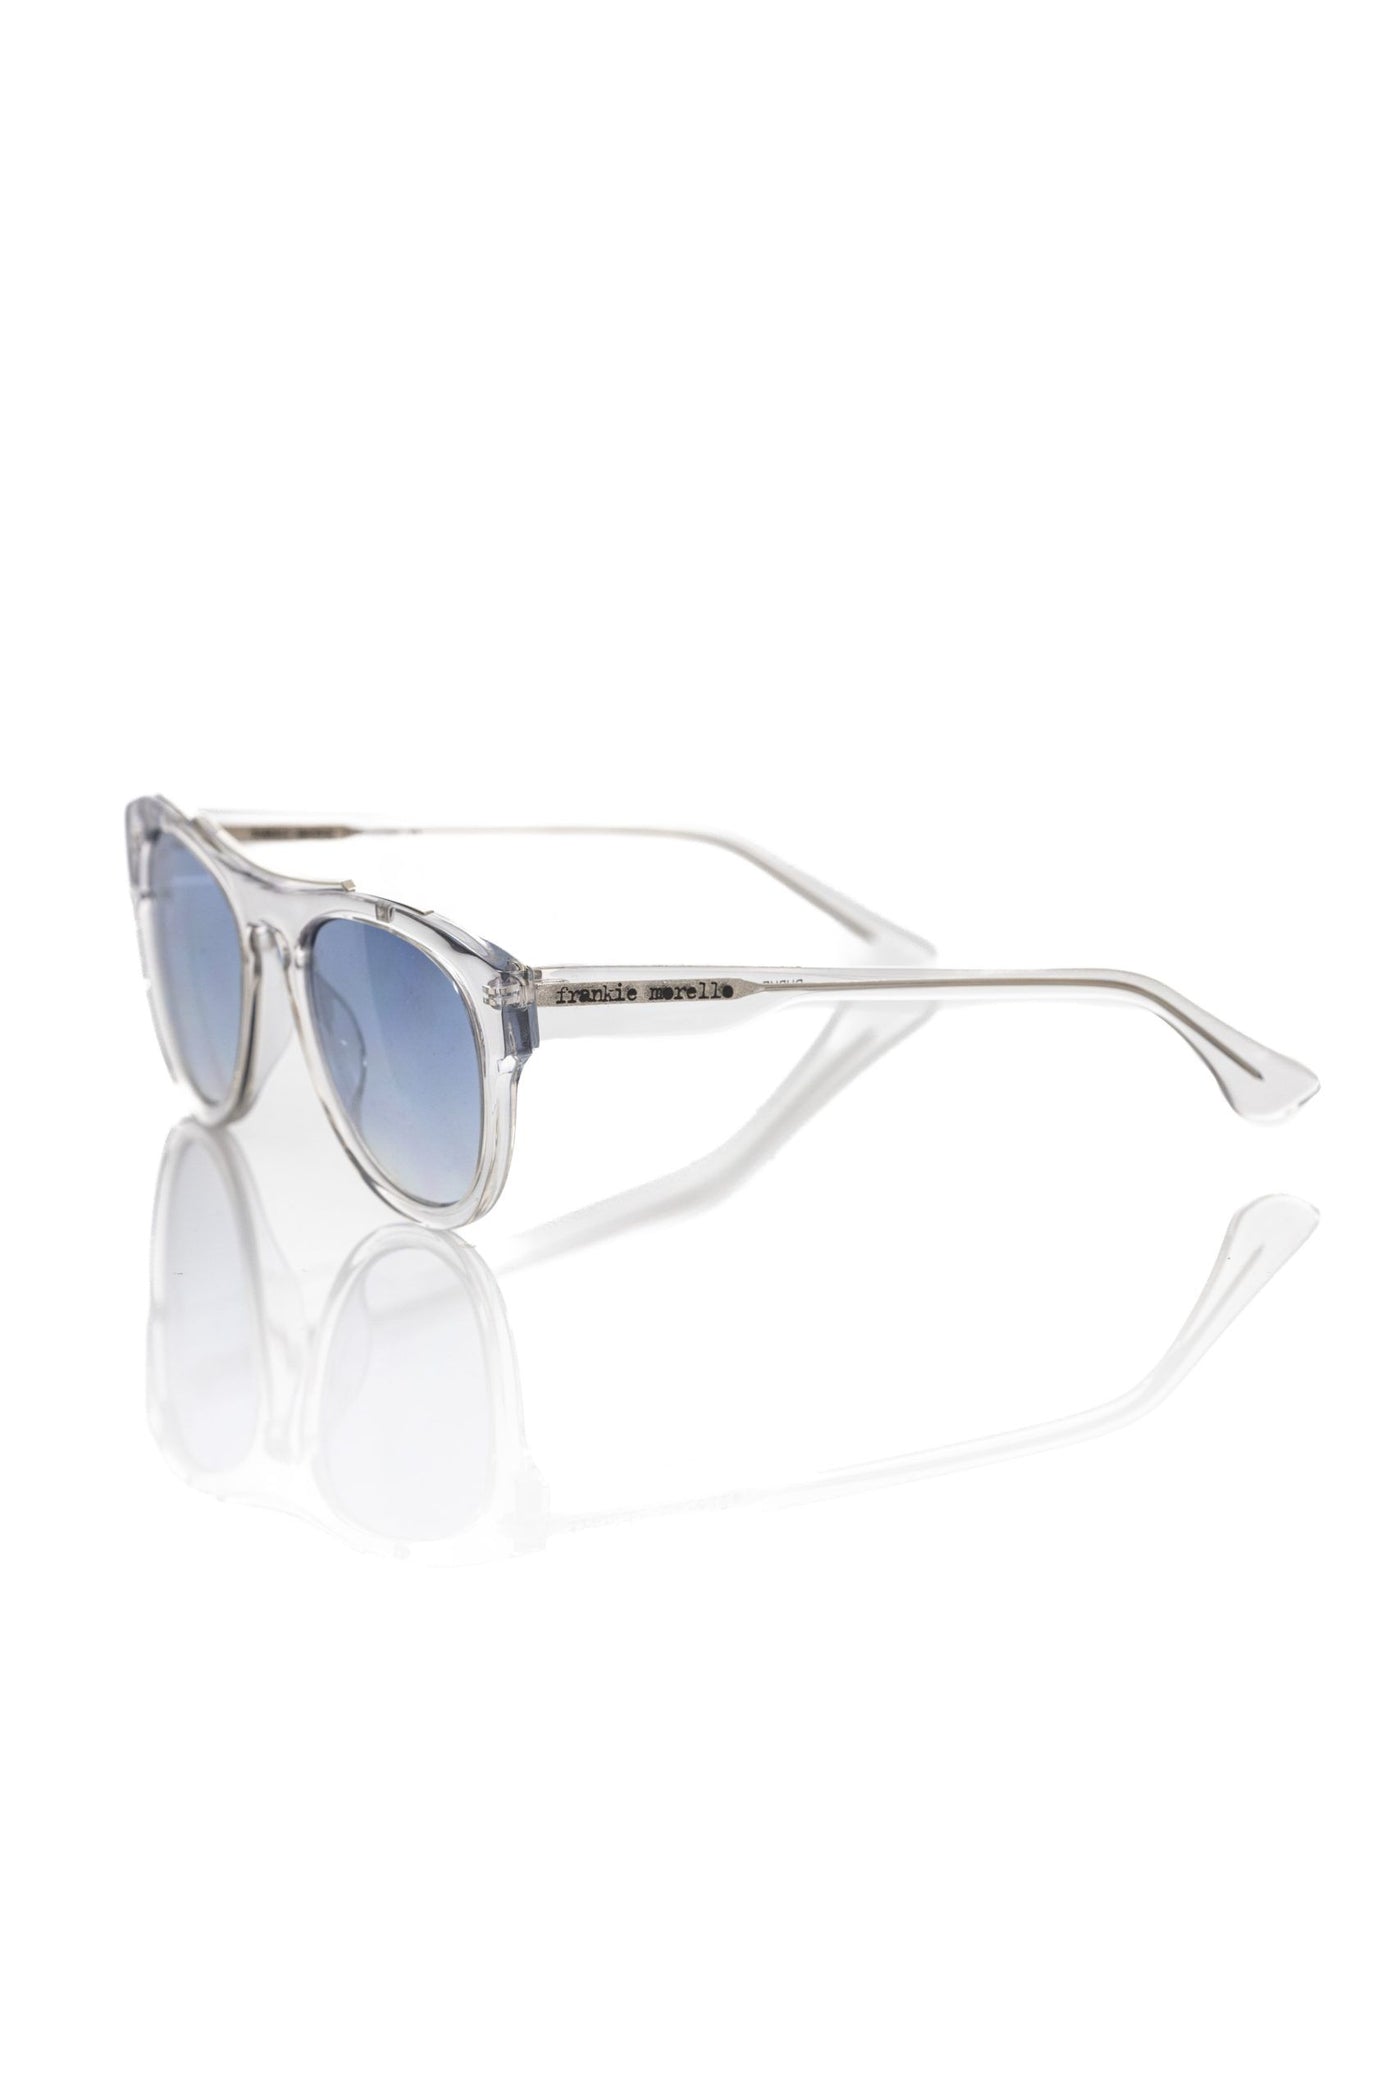 Frankie Morello White Acetate Sunglasses